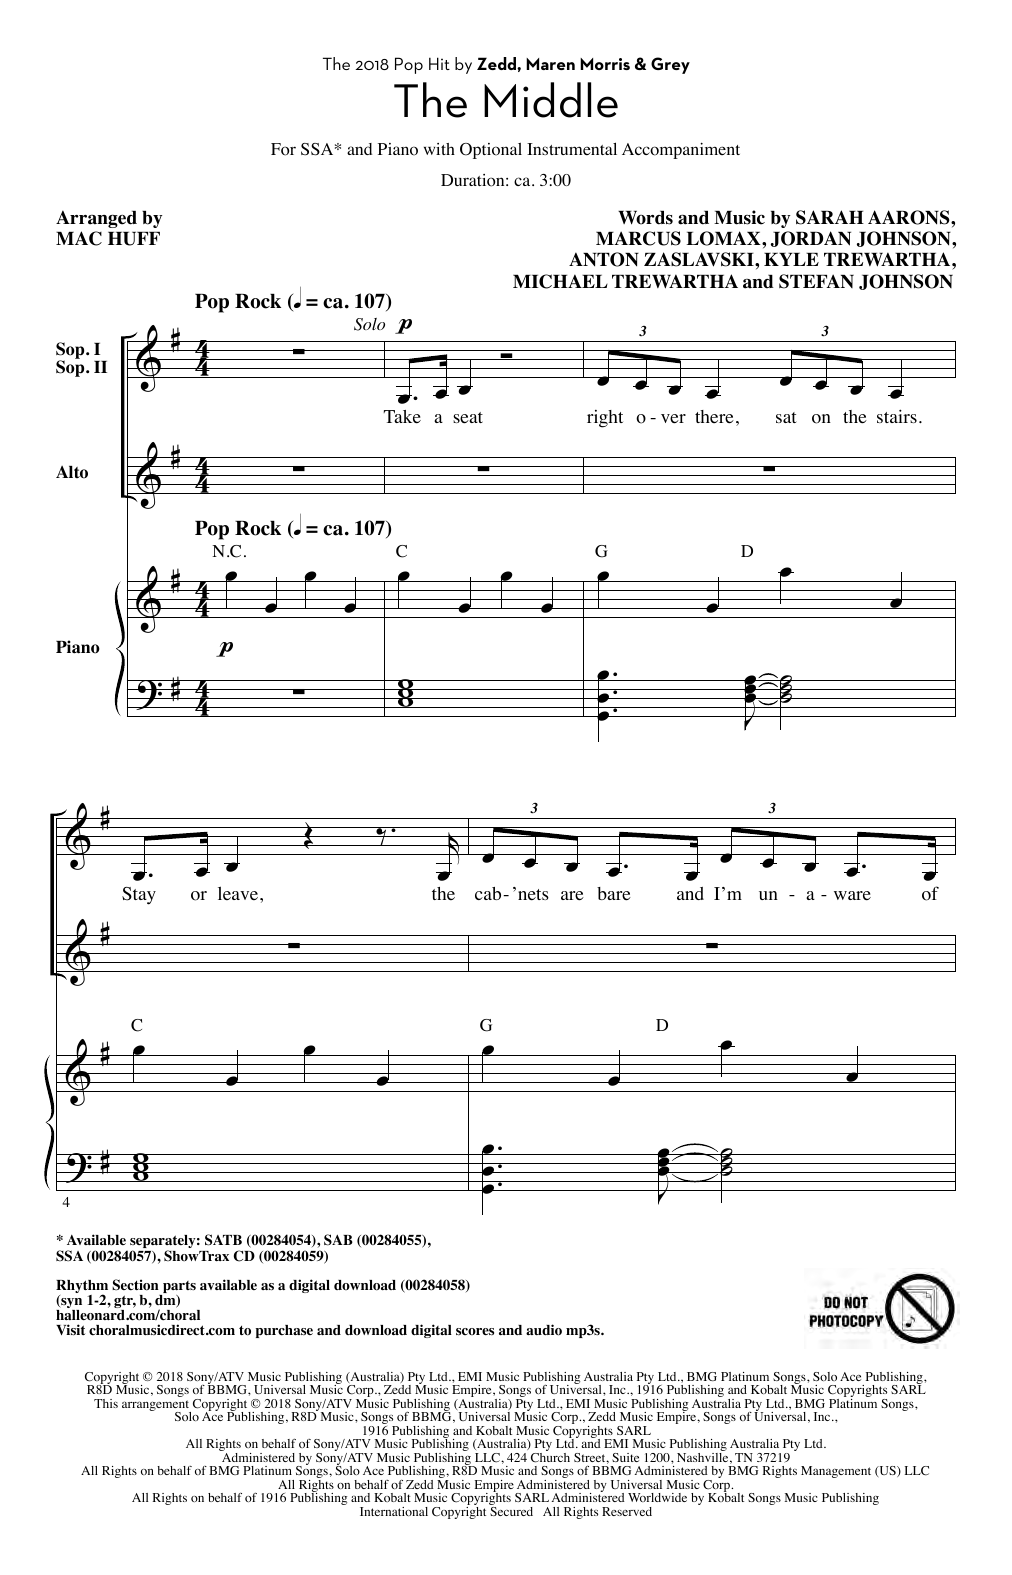 Zedd, Maren Morris & Grey The Middle (arr. Mac Huff) Sheet Music Notes & Chords for SATB - Download or Print PDF